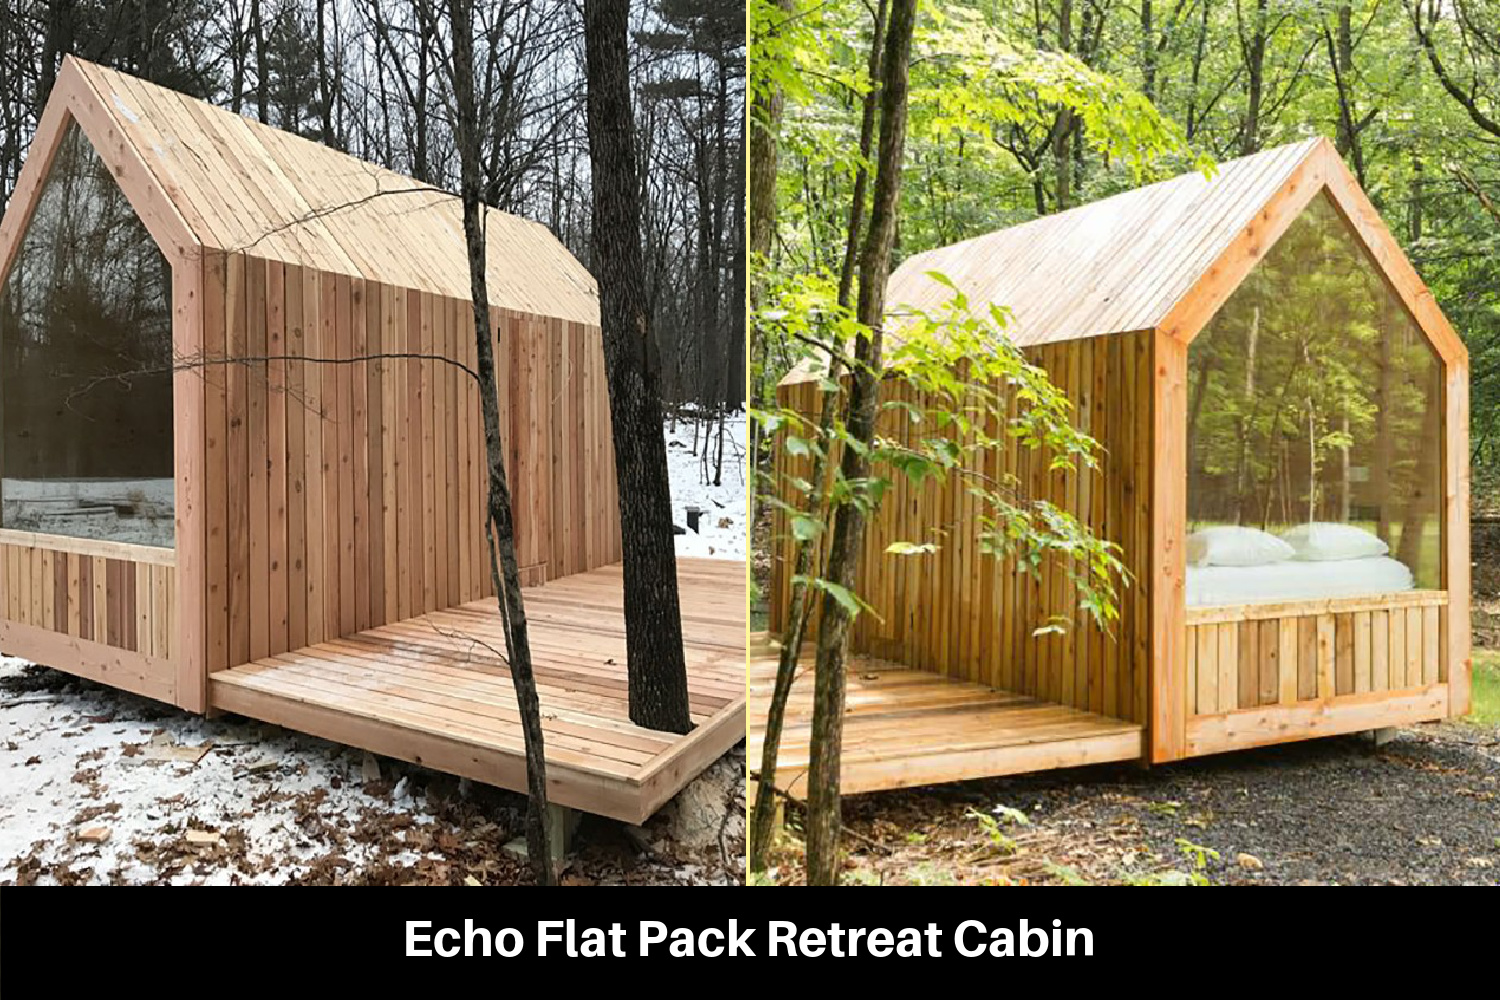 Echo Flat Pack Retreat Cabin